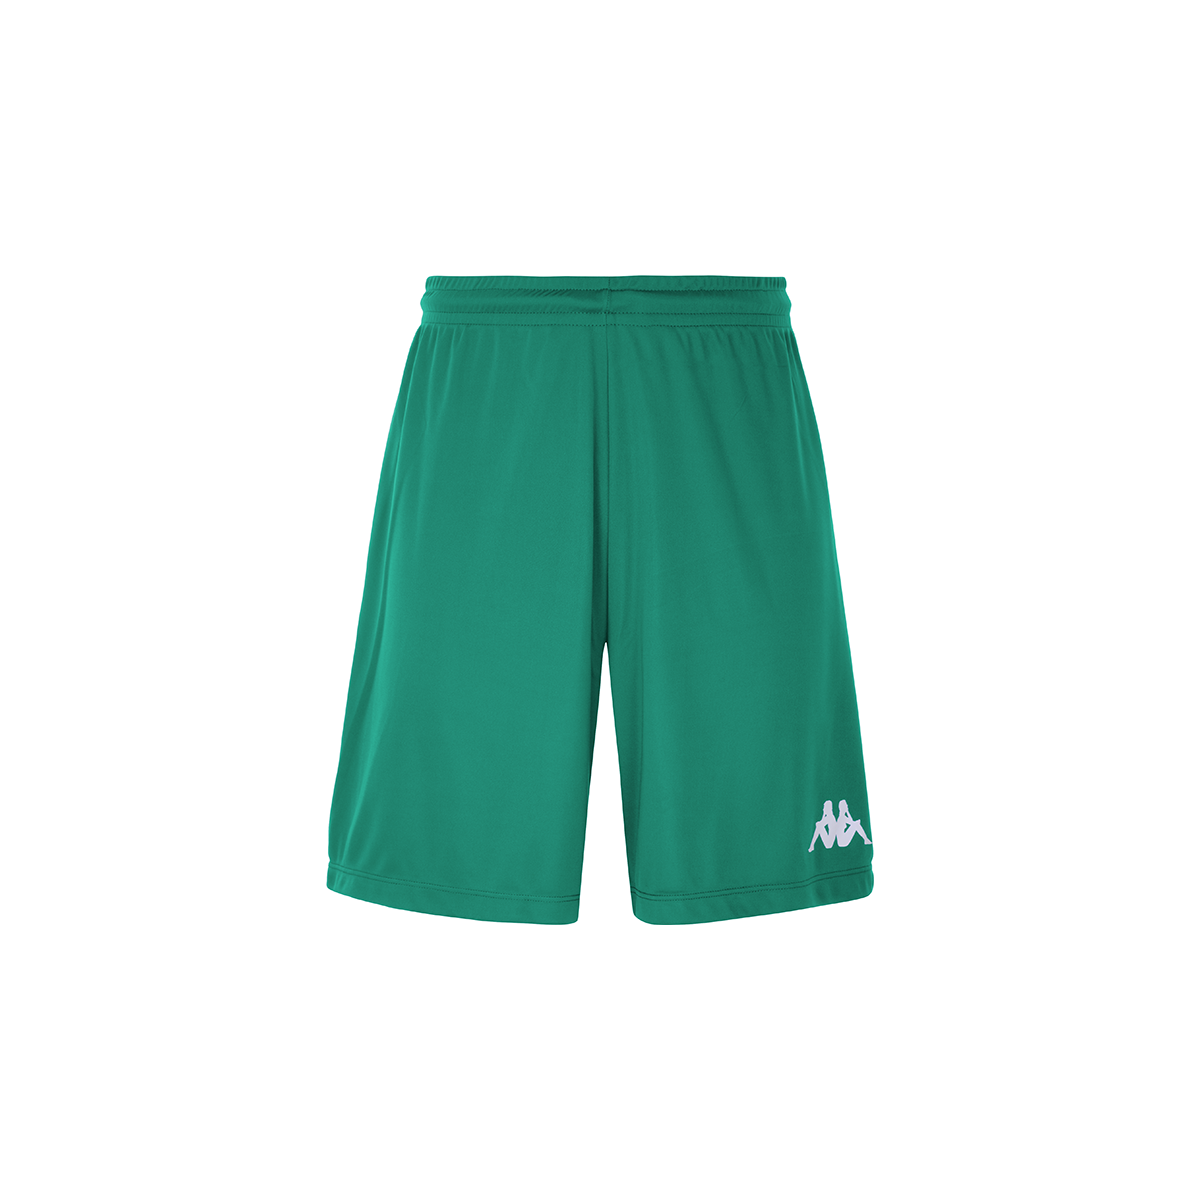 Horndean FC - GK Short - Green